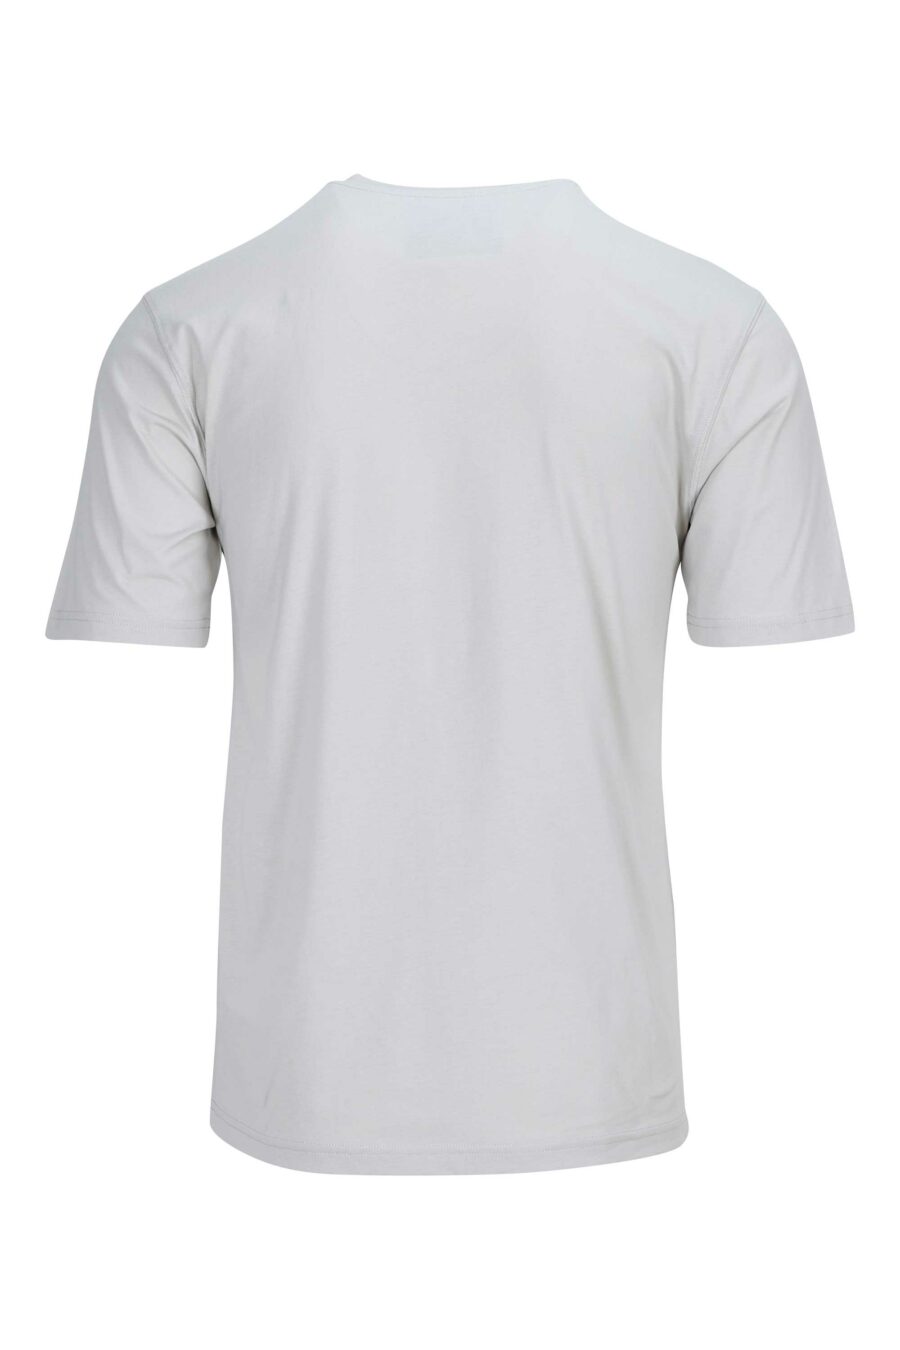 T-shirt gris avec maxilogo "Moschino" ticket - 889316954807 1